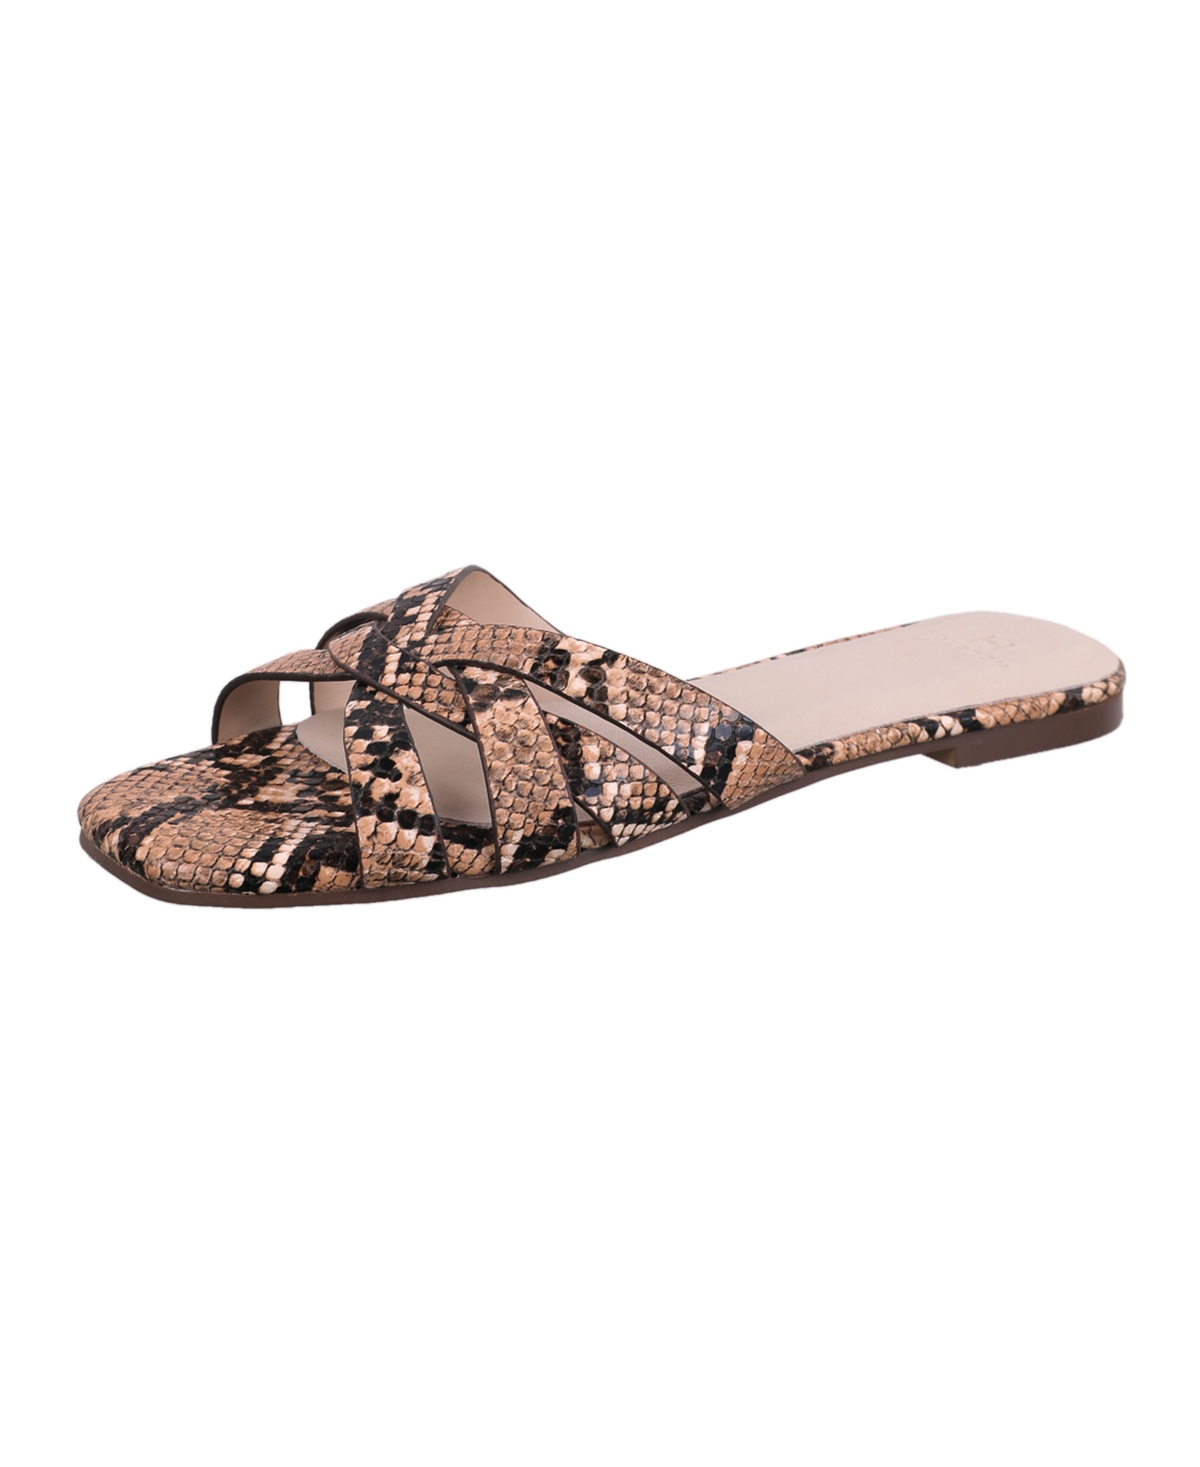 Women's S2108 Flat Sandals - Metalic Snake